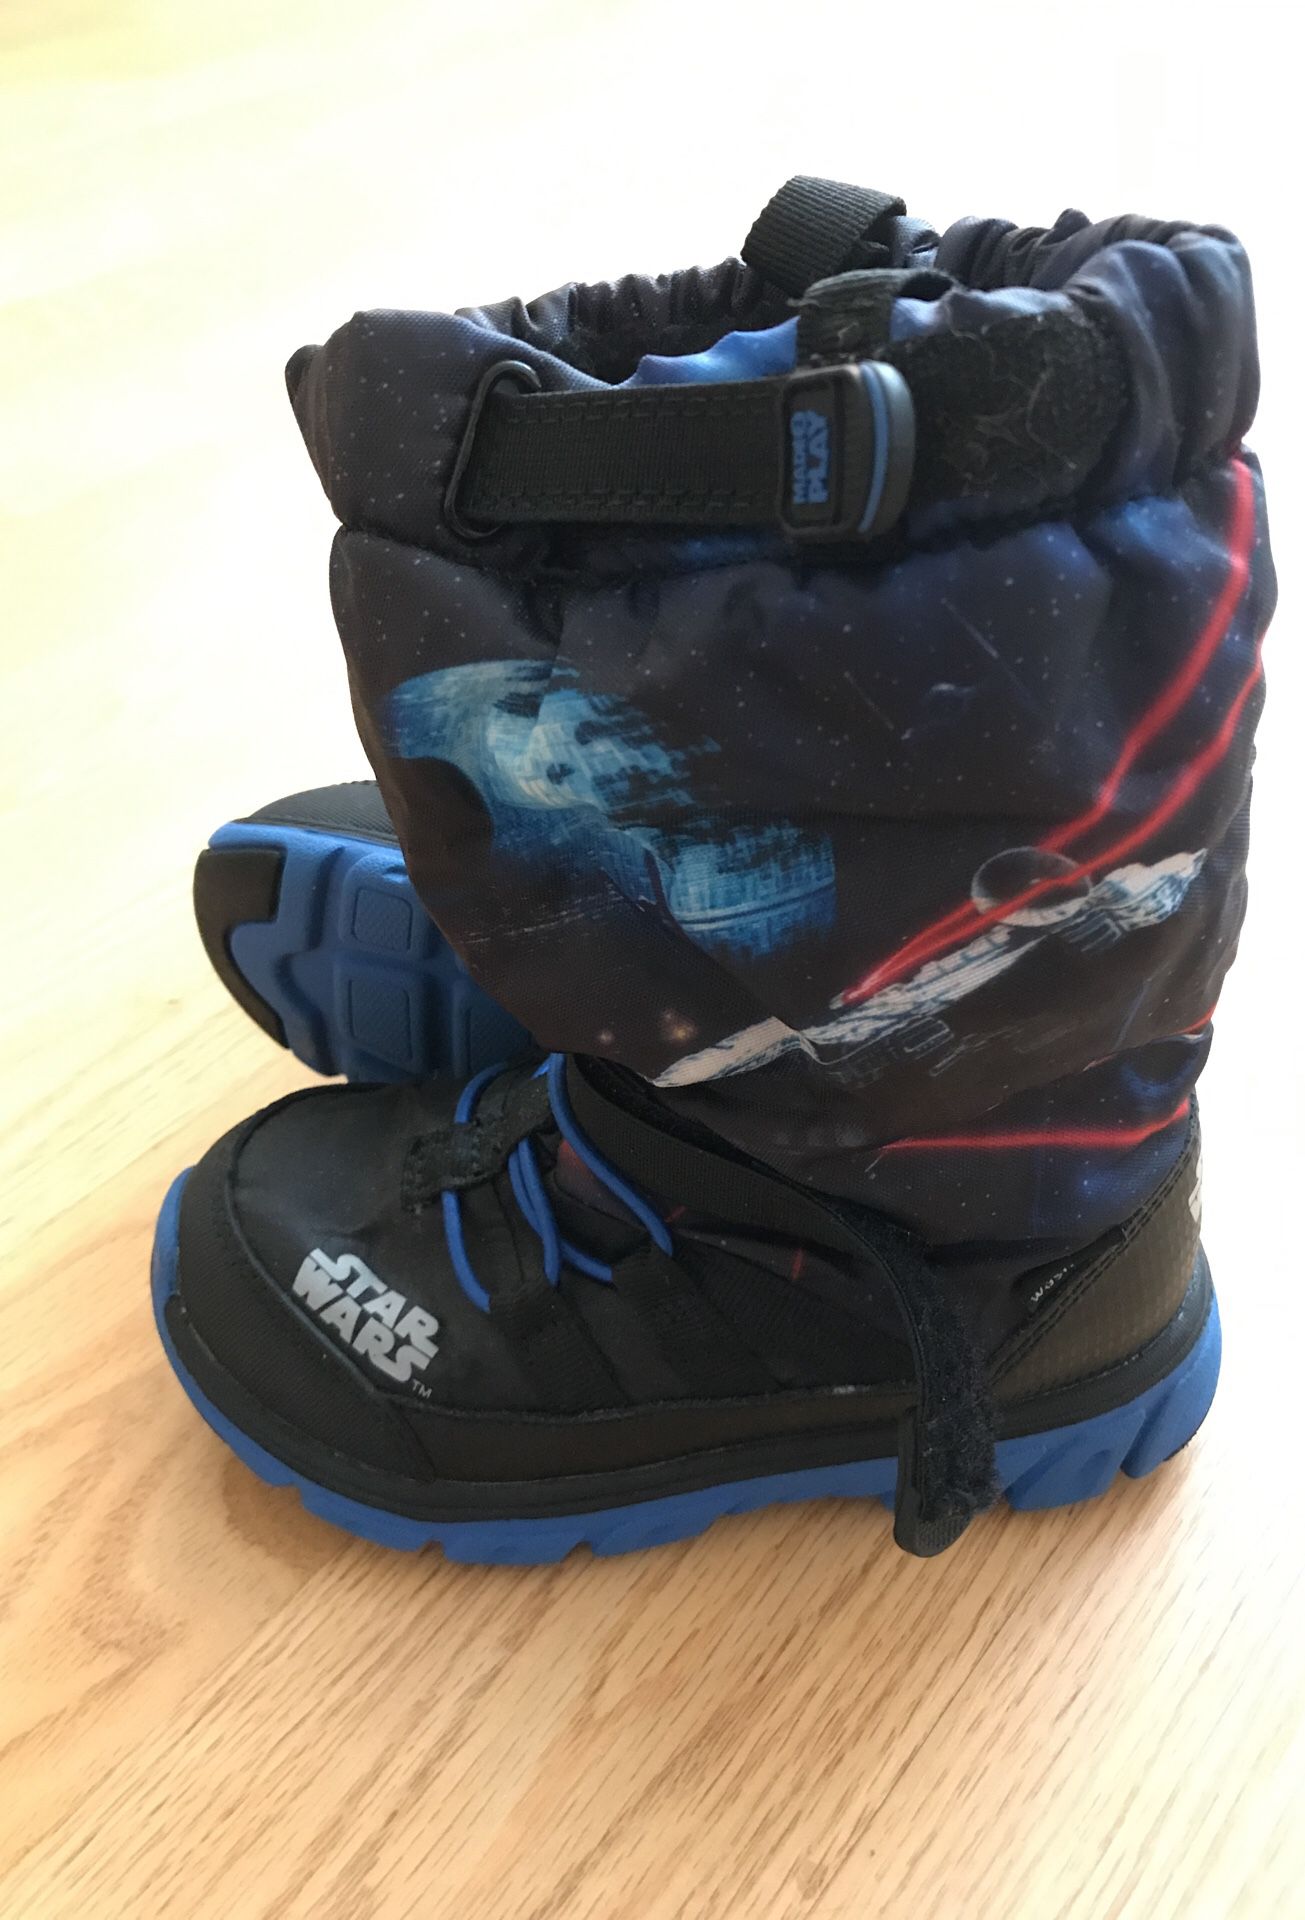 Stride rite Star Wars toddler snow boots size 10